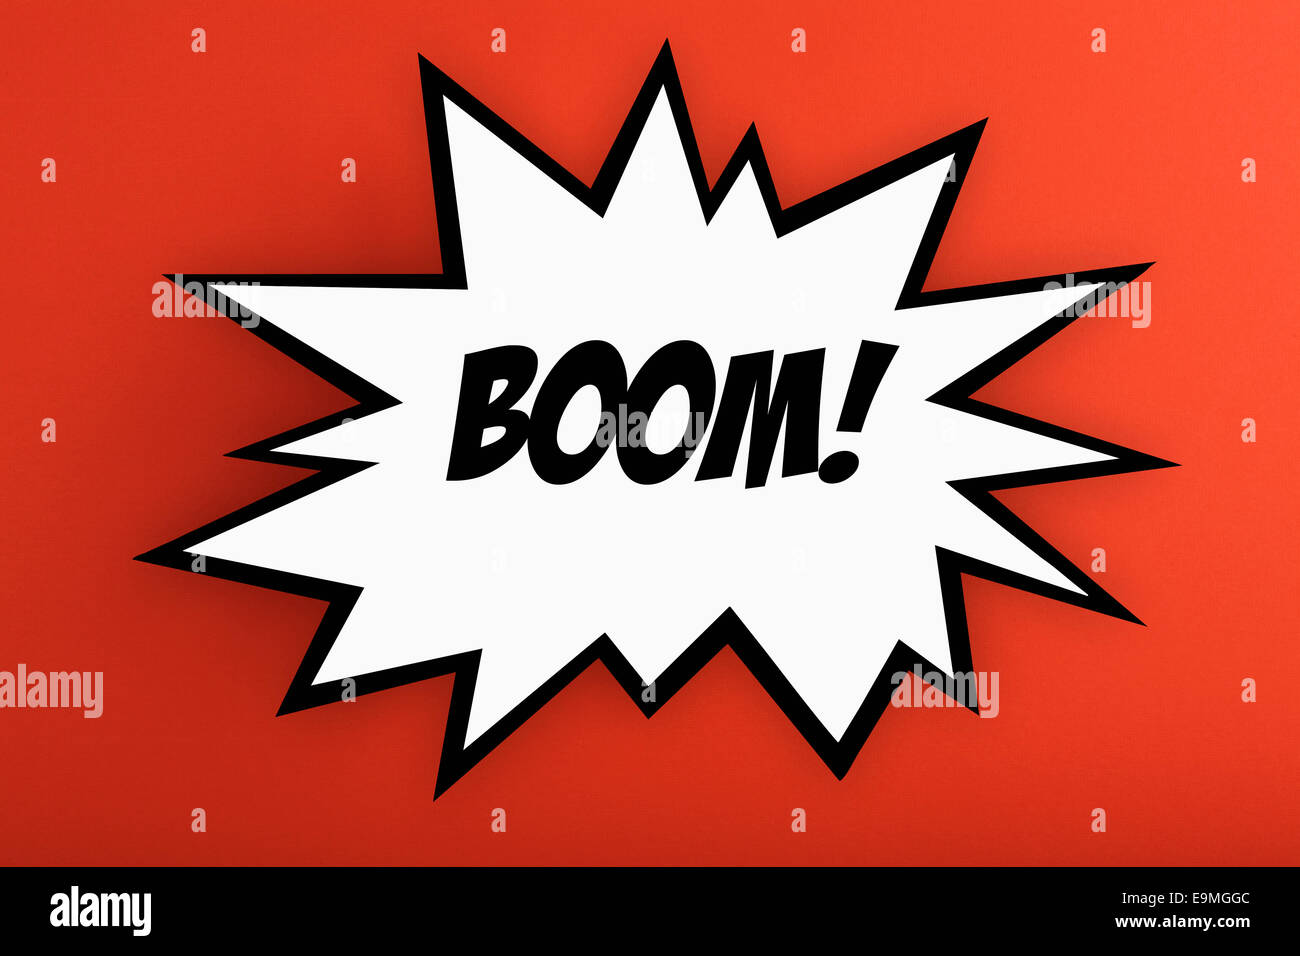 Exploding Boom! thought bubble against orange background Stock Photo